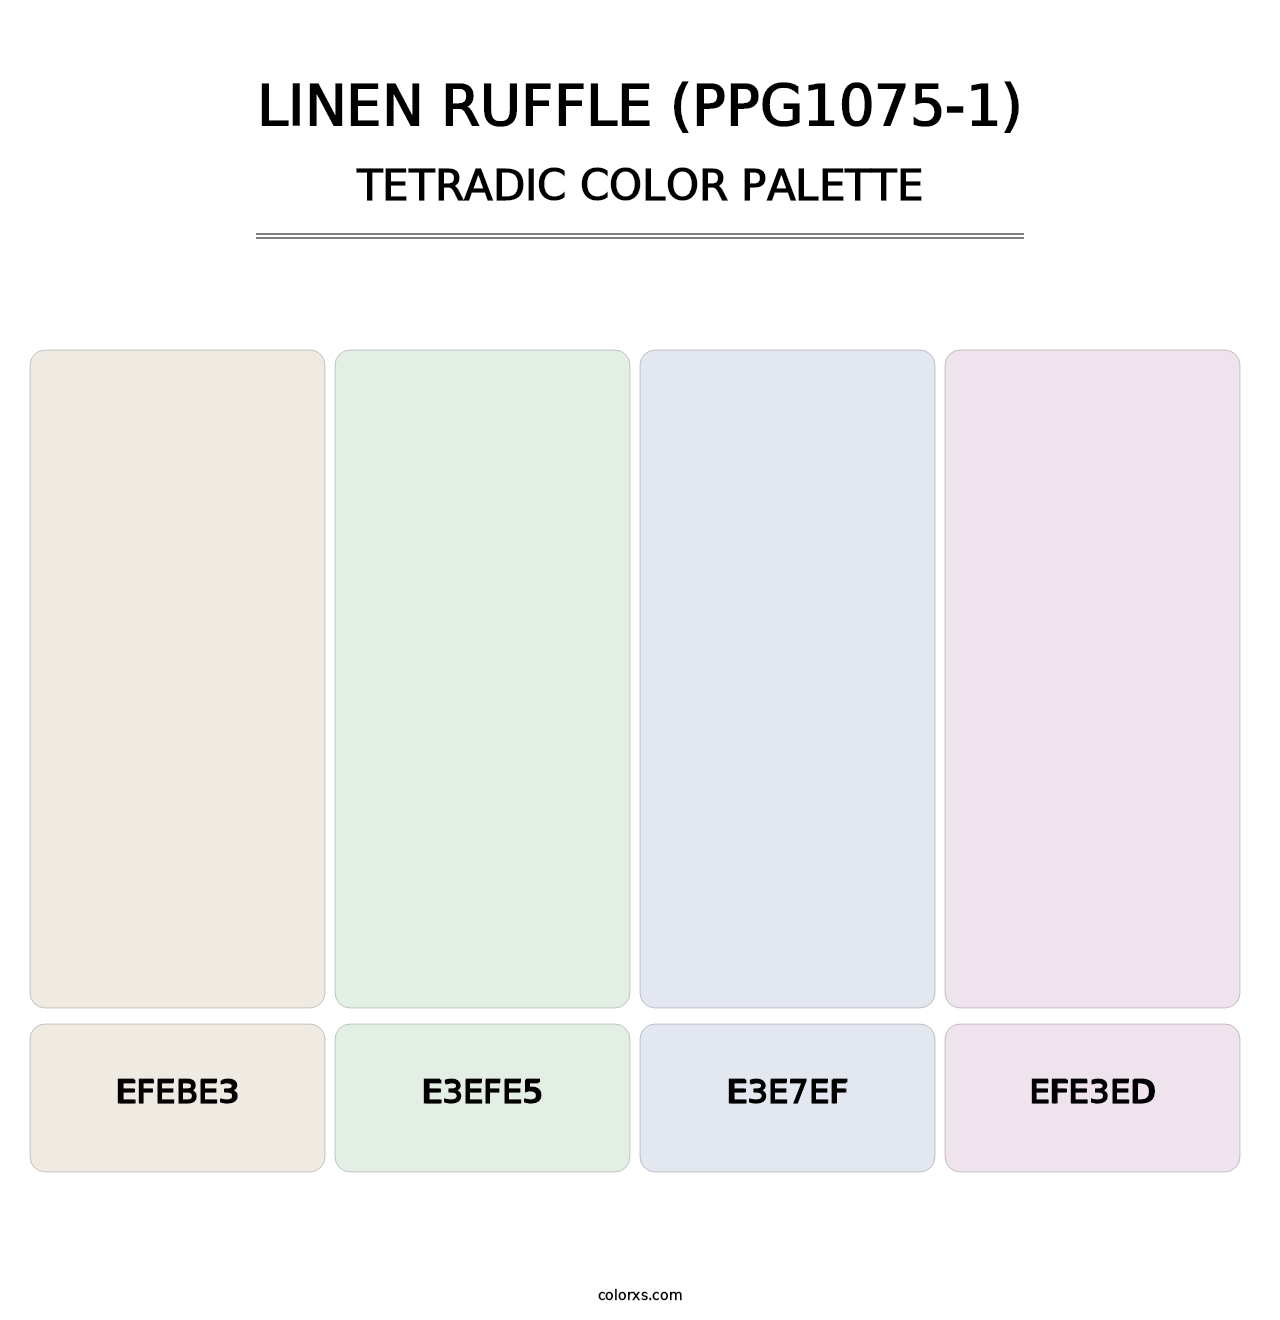 Linen Ruffle (PPG1075-1) - Tetradic Color Palette